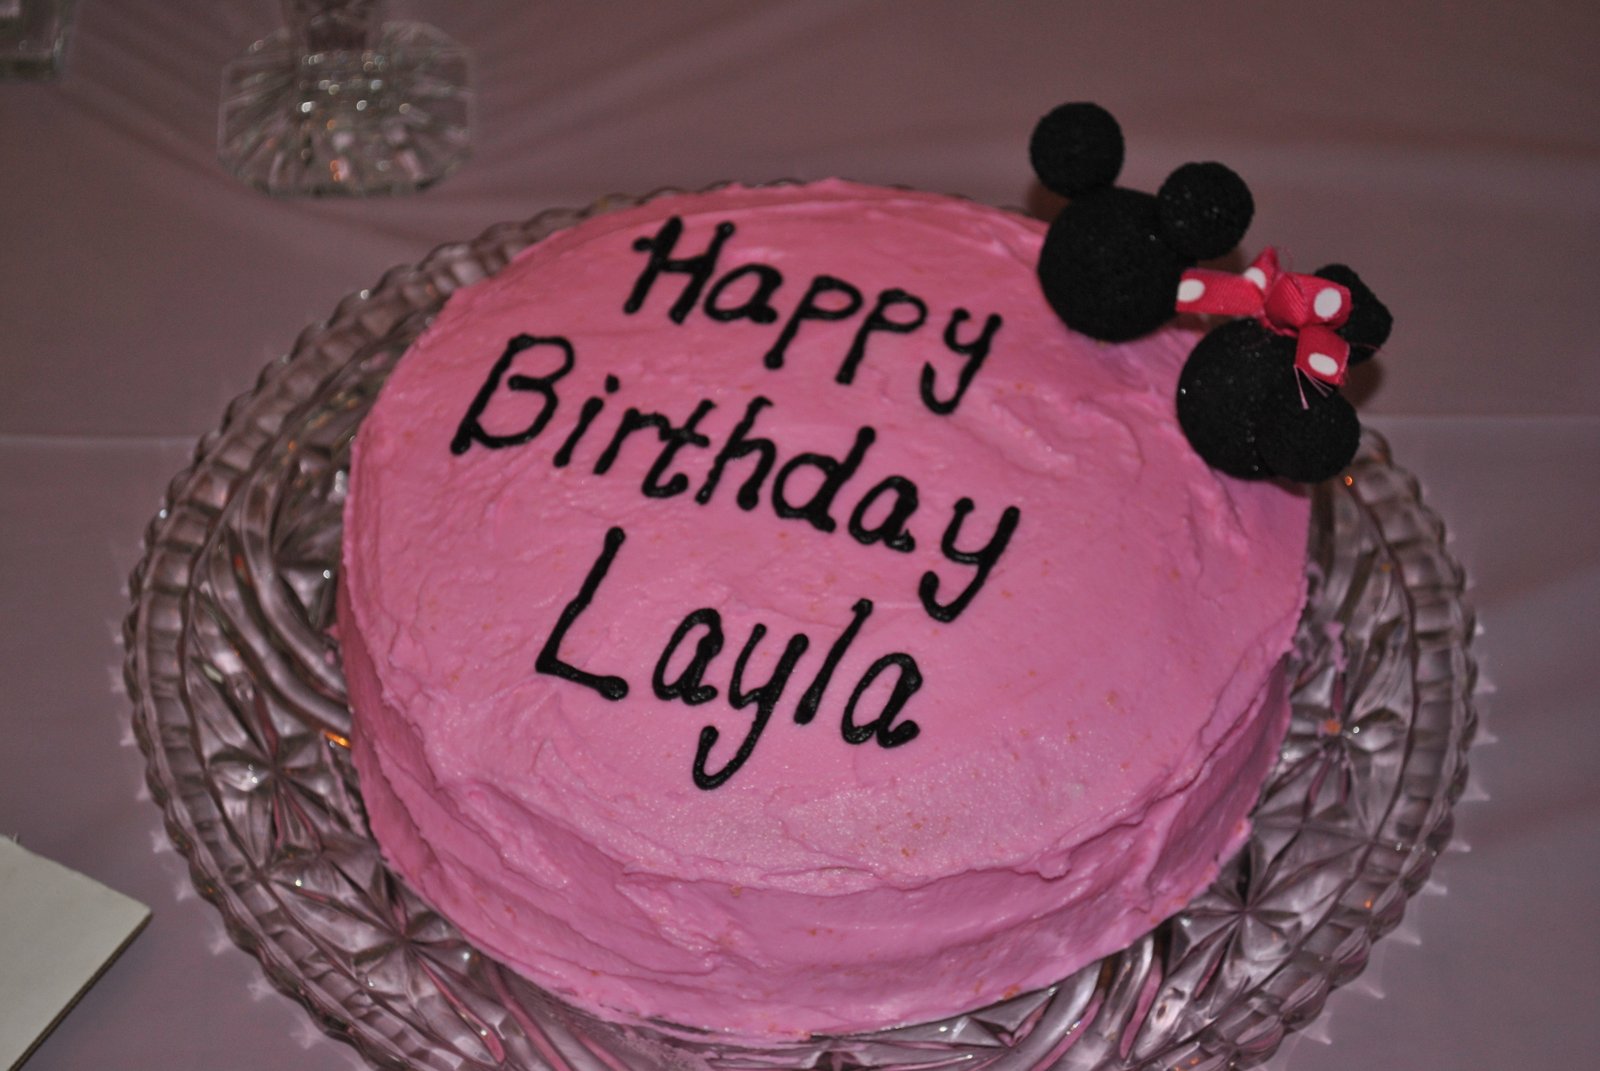 Happy Birthday! layla8540 and RASHIDA12! 